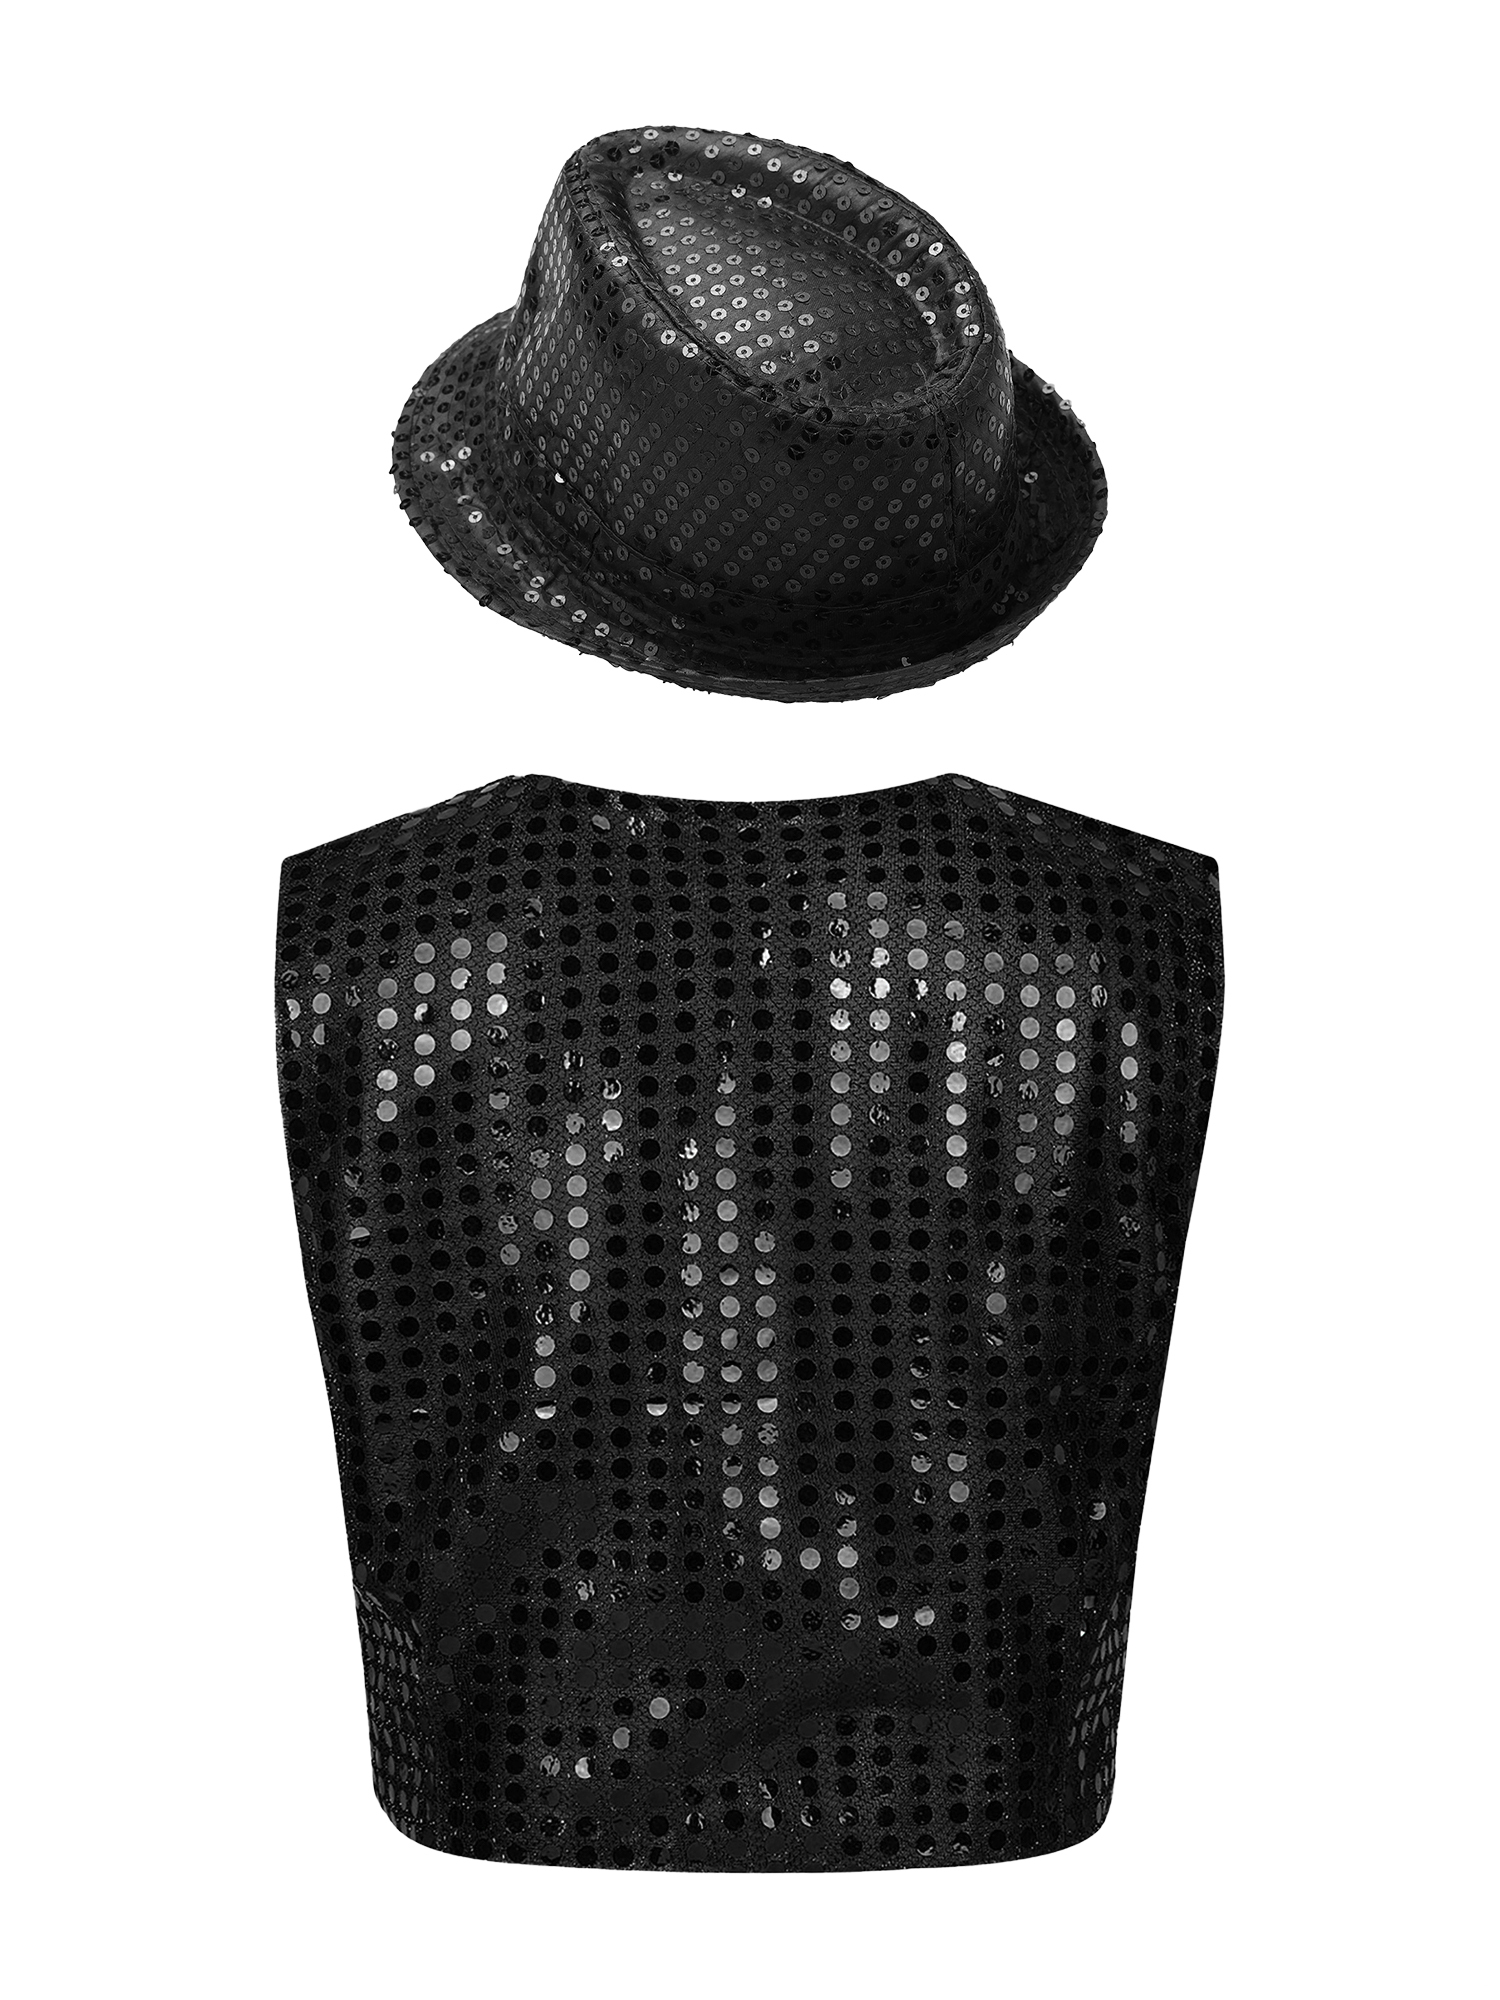 IEFIEL Kids Boys Sparkle Sequins Button Down Vest with Hat Dance Outfit Set Hip Hop Jazz Stage Performance Costume Black 13-14 - image 2 of 7